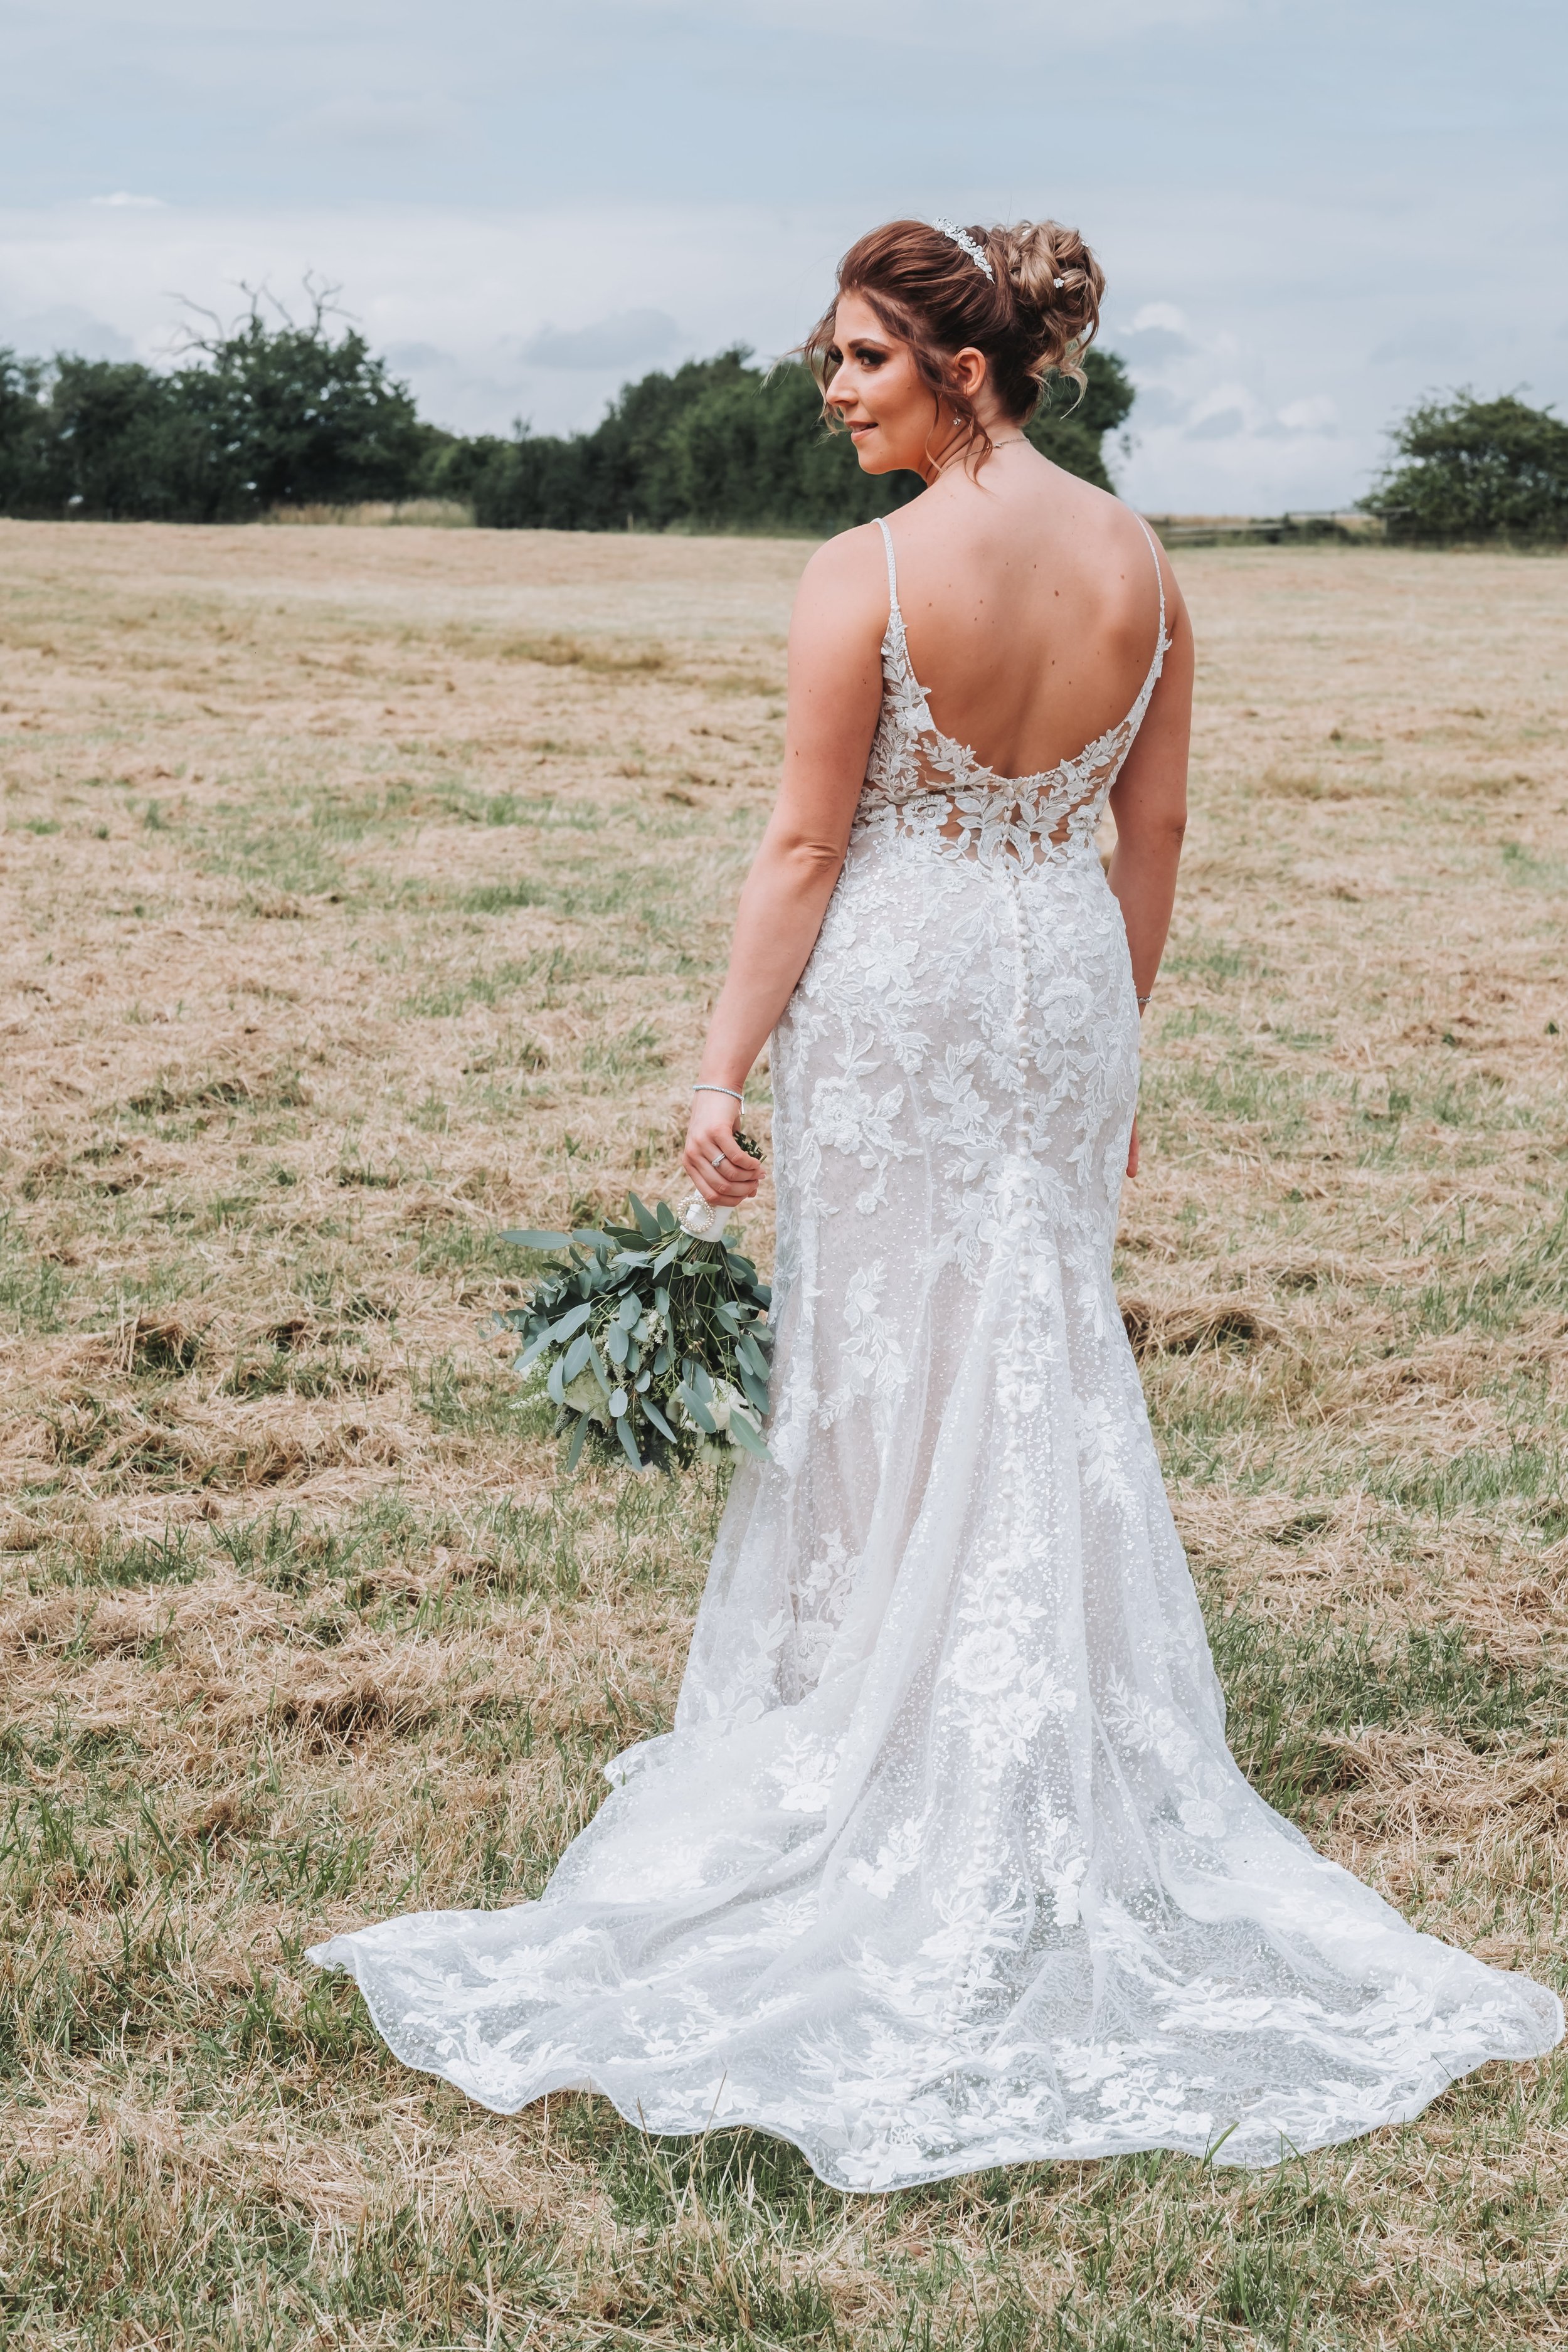 bride-dress-flowers-wedding-danielgoodyearphotography-lincolnshire-photographer.jpg